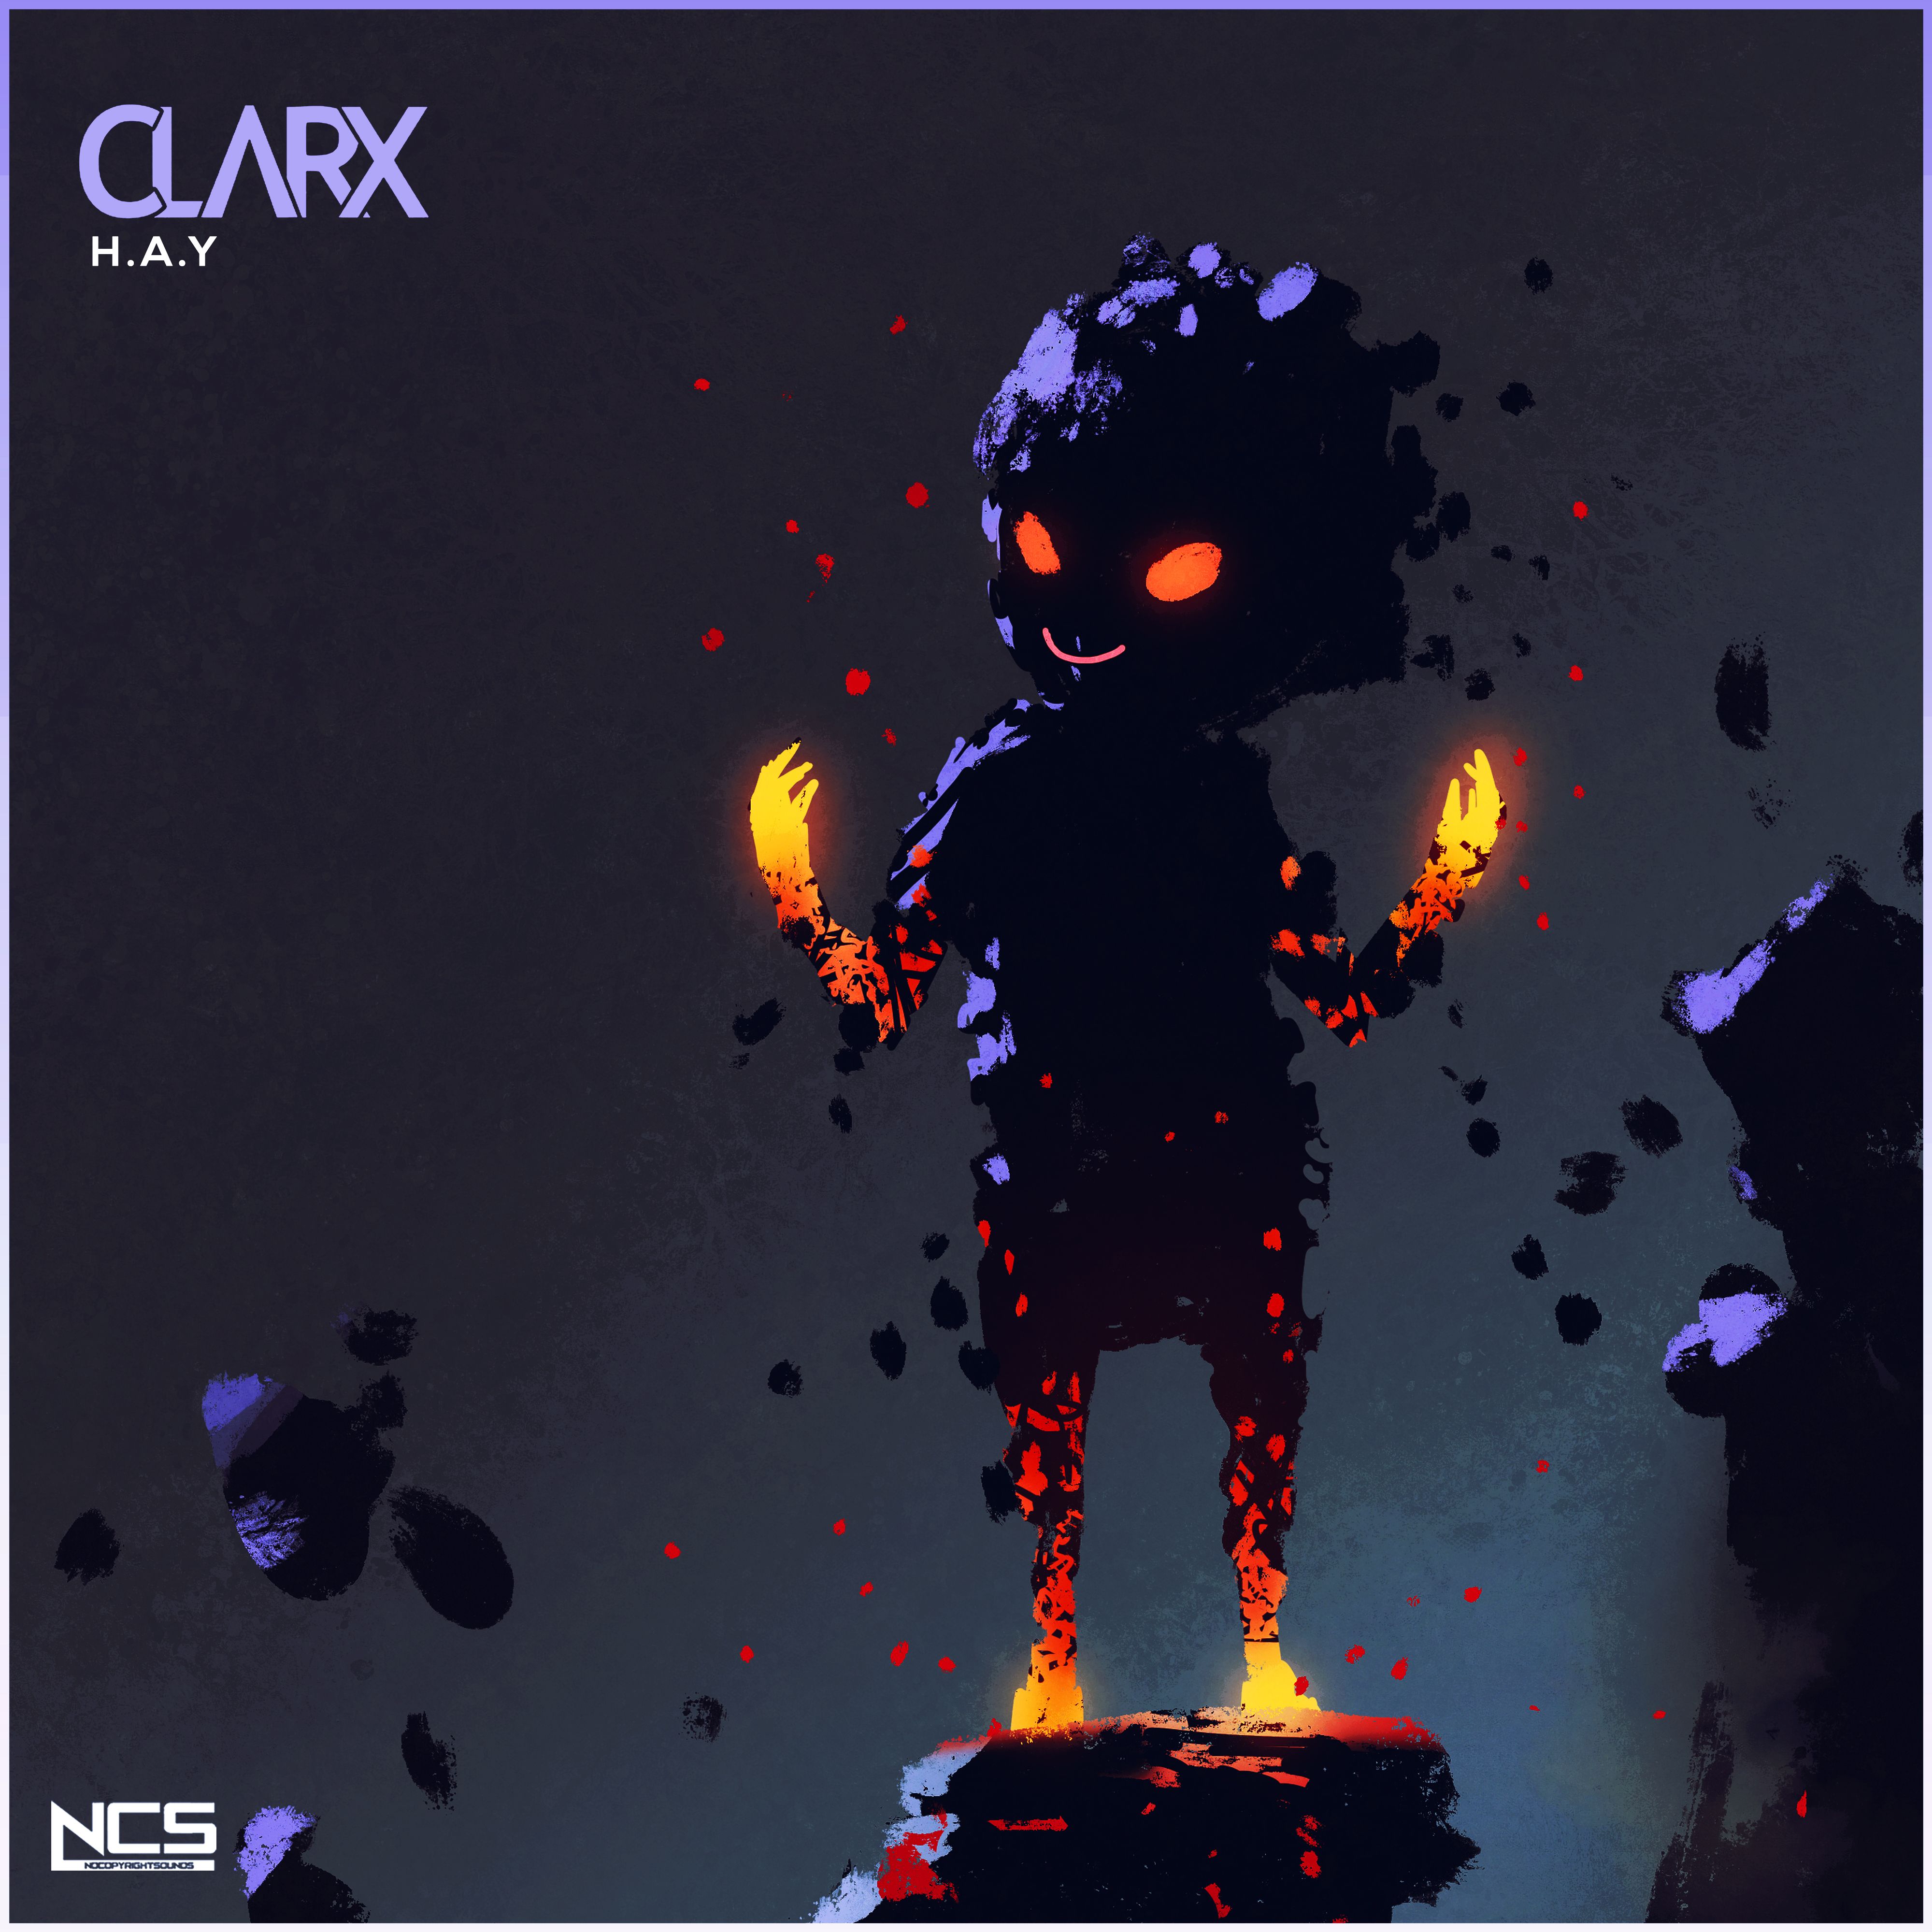 डाउनलोड करा Clarx - H.A.Y [NCS Release]